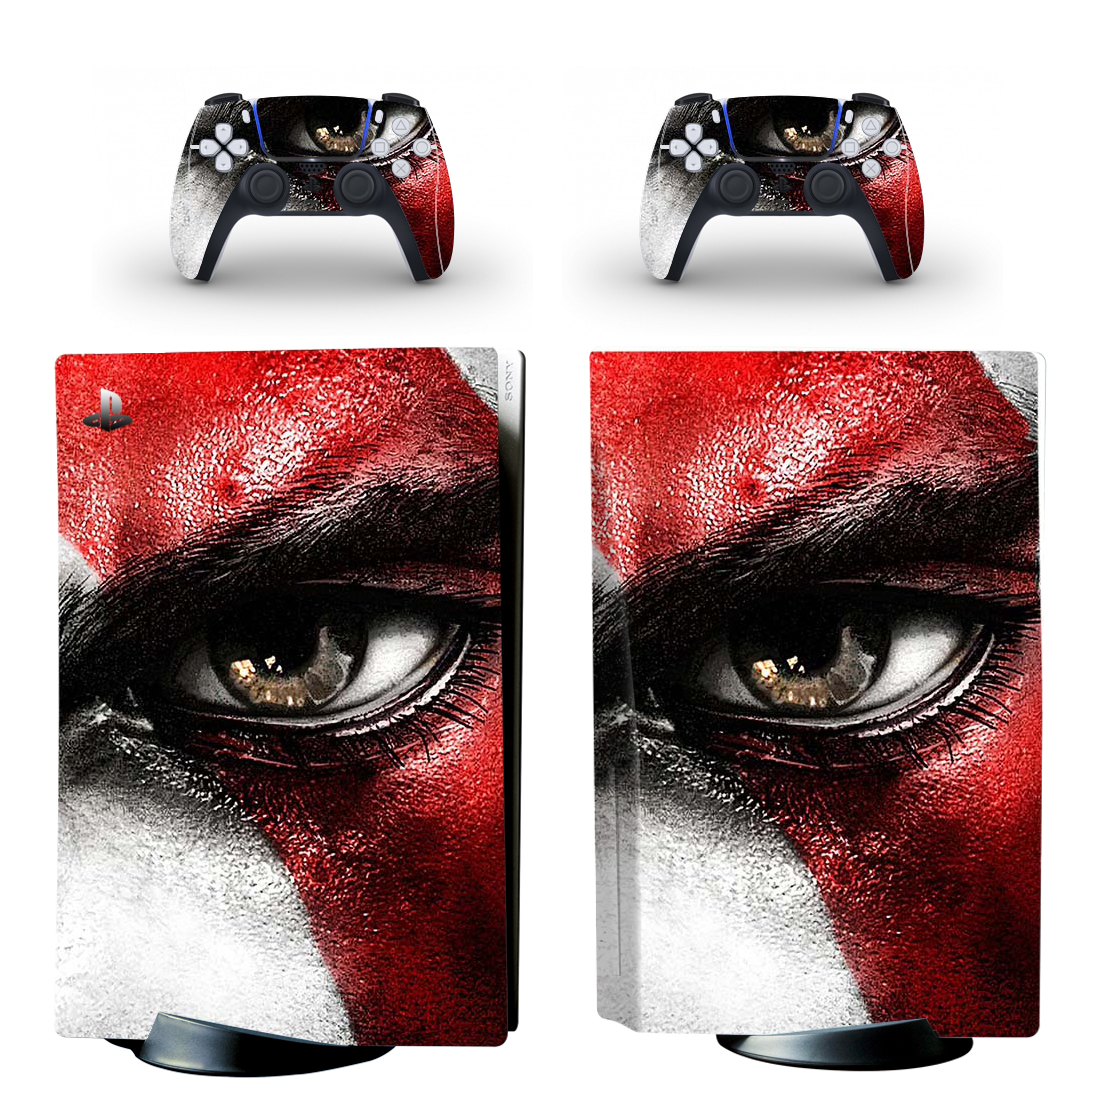 God Of War III PS5 Skin Sticker Design 1